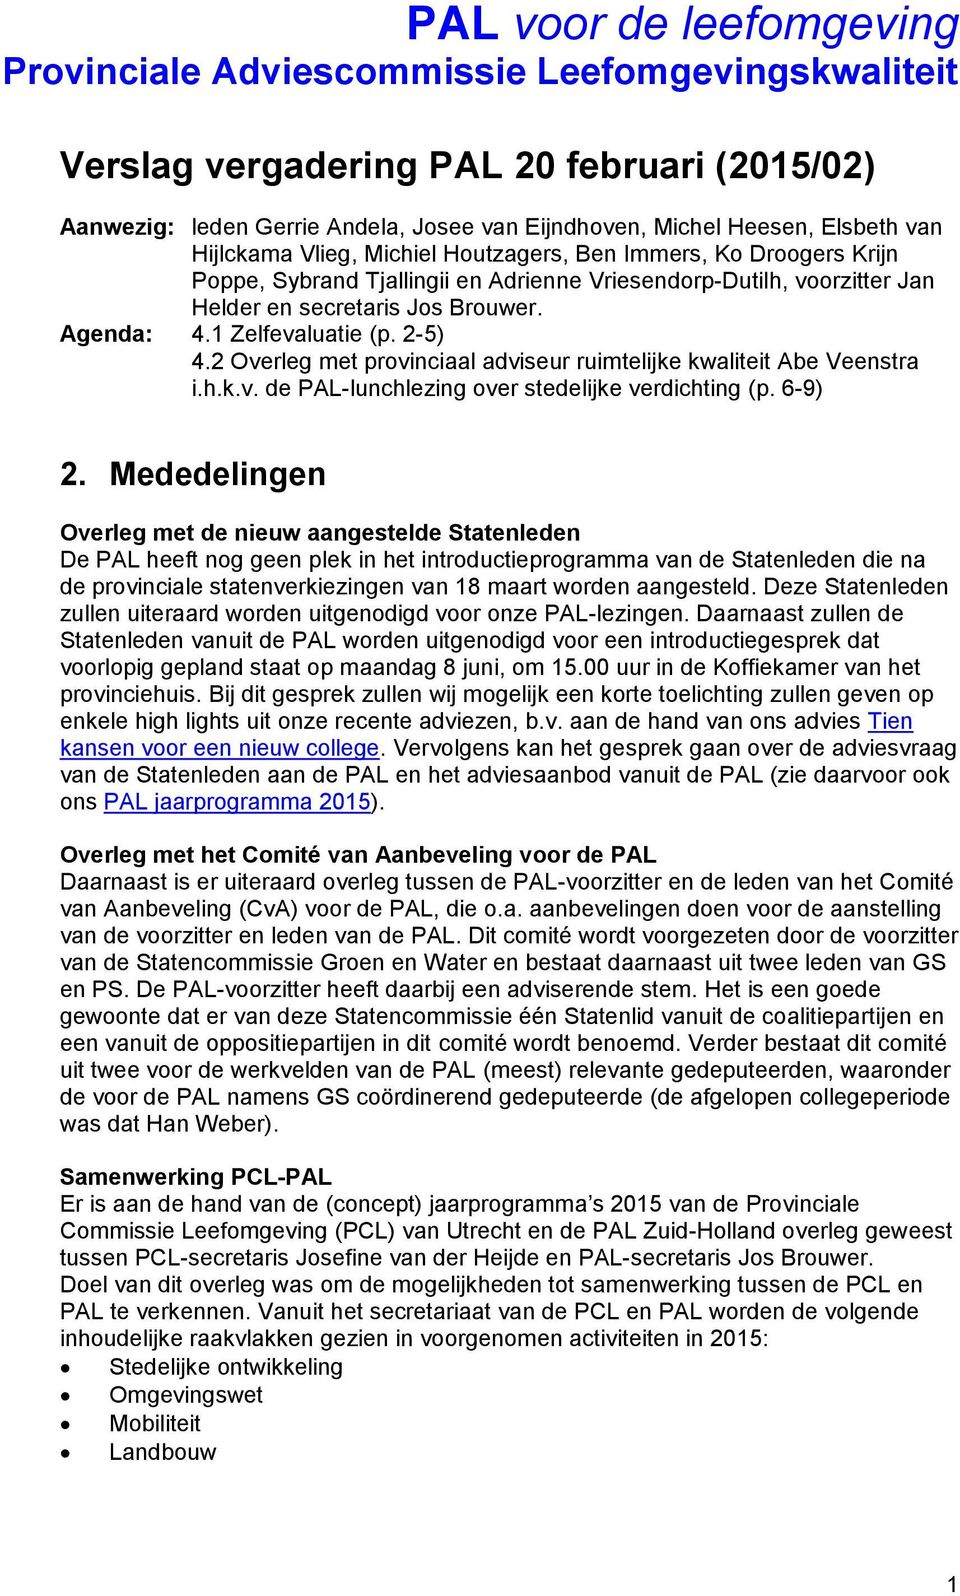 2-5) 4.2 Overleg met prvinciaal adviseur ruimtelijke kwaliteit Abe Veenstra i.h.k.v. de PAL-lunchlezing ver stedelijke verdichting (p. 6-9) 2.